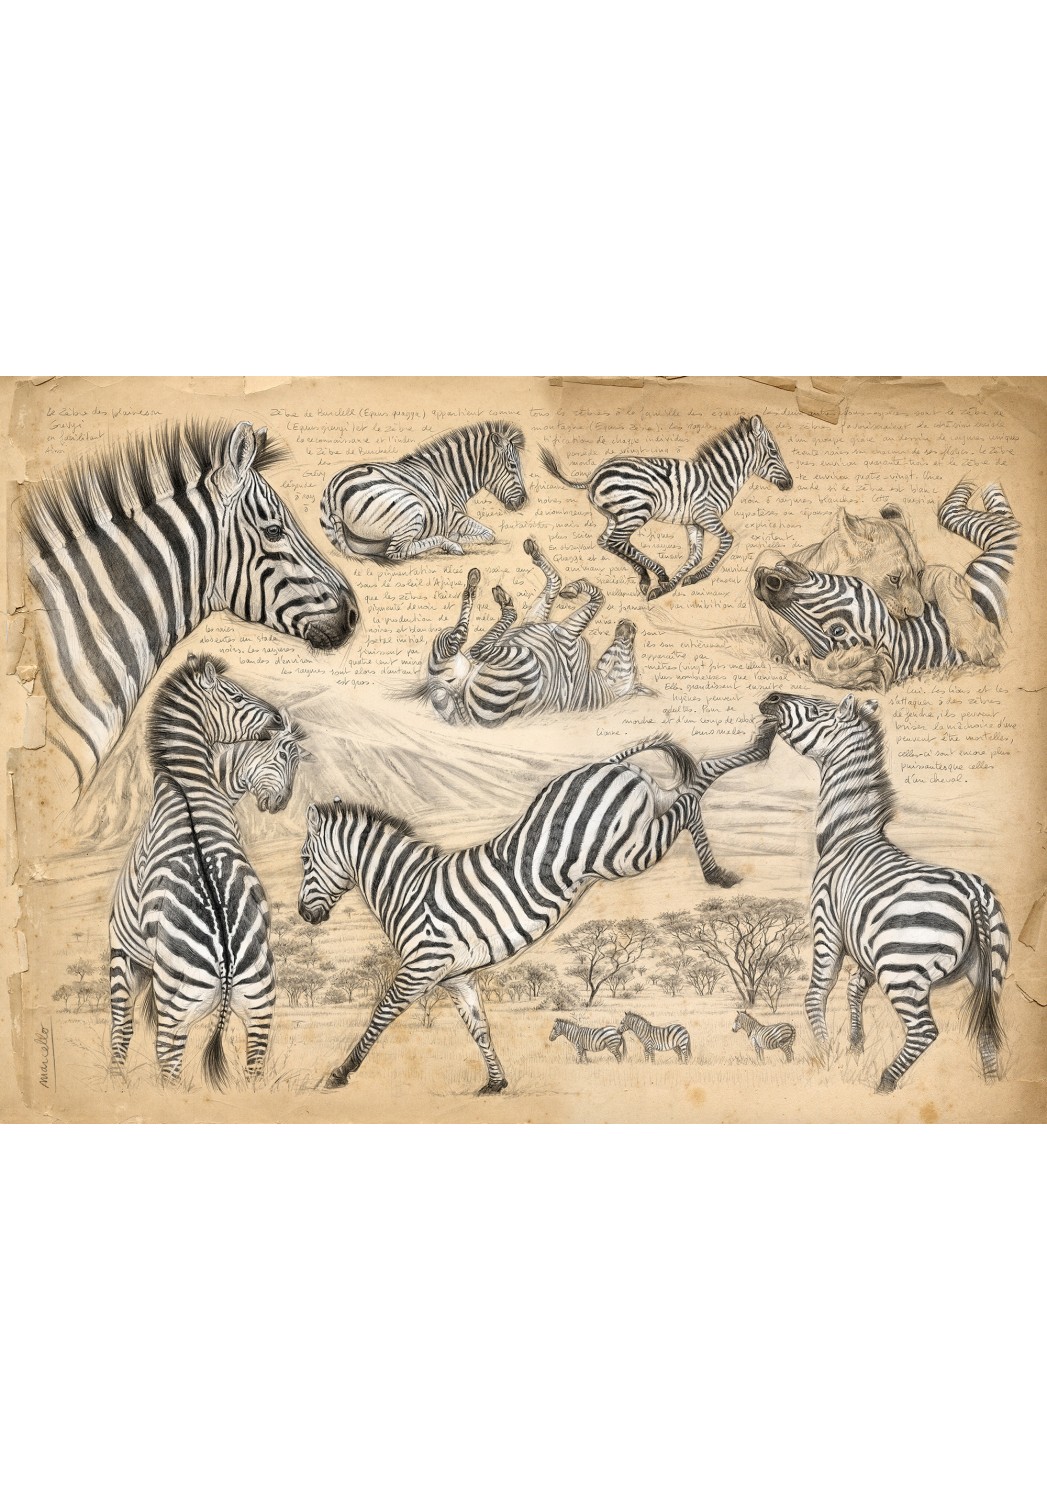 Marcello-art : Cartes de faire part 403 - Equus quagga